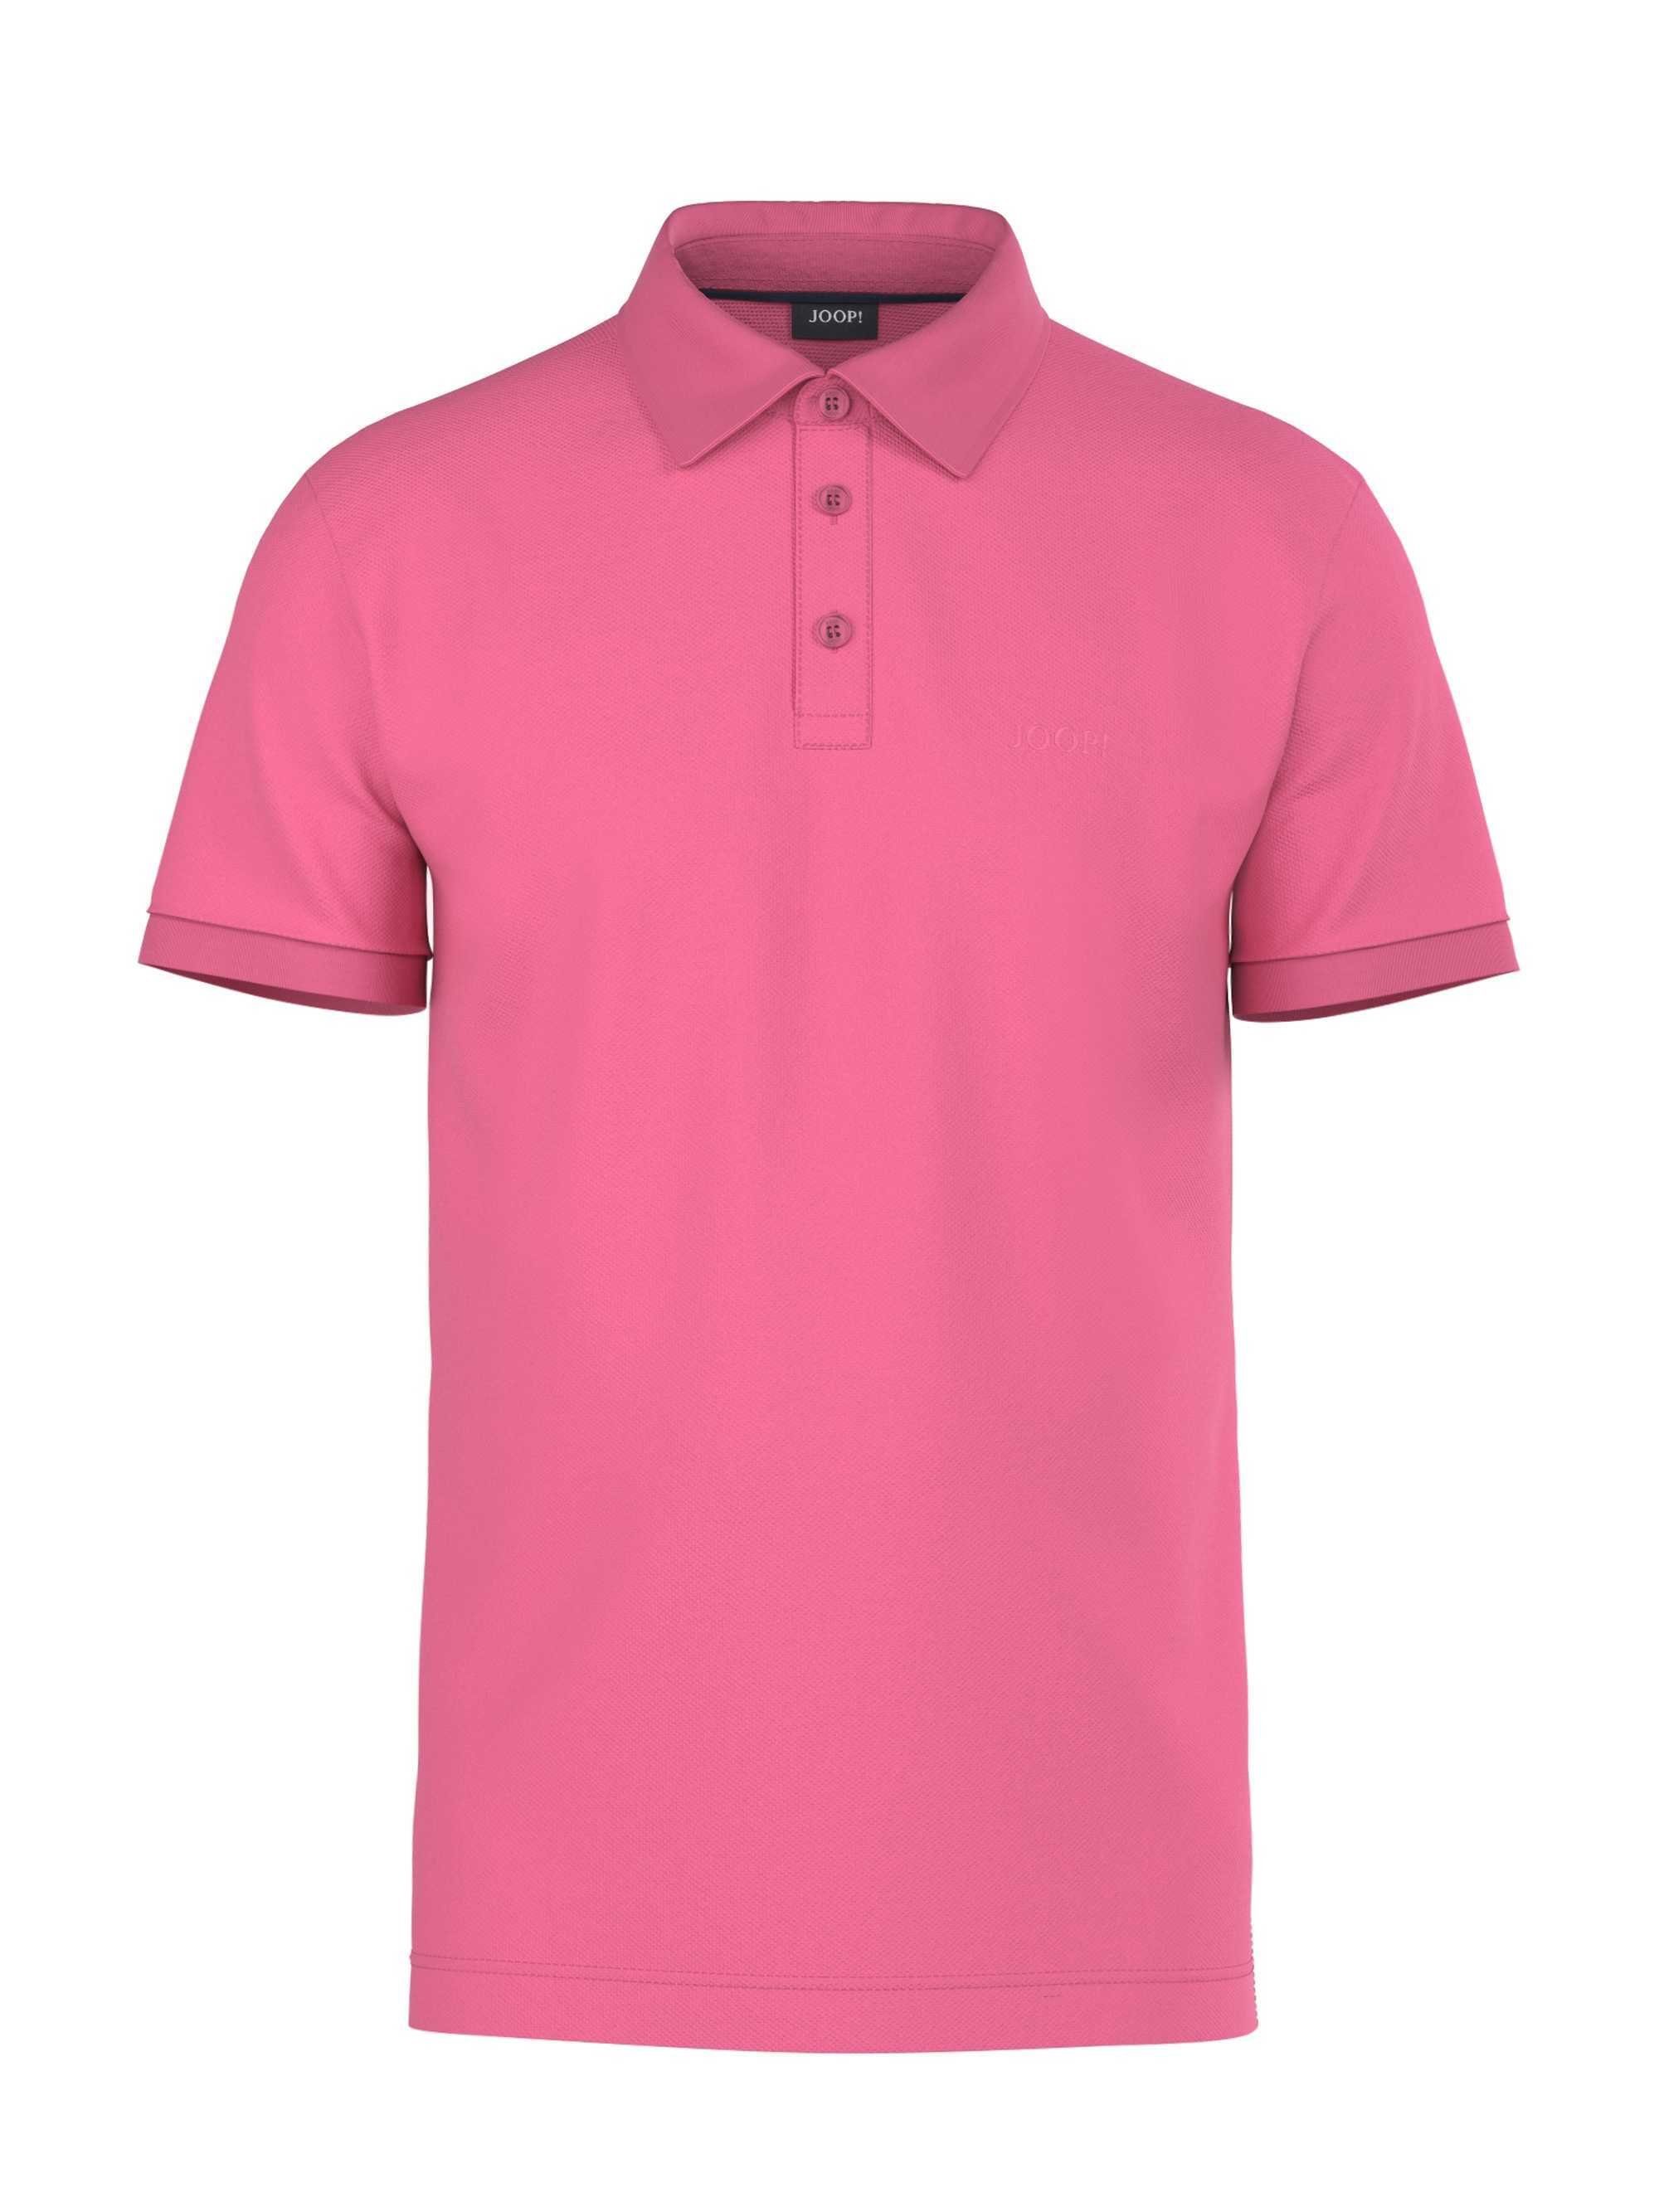 Joop! Poloshirt Herren Poloshirt - Primus, Polokragen Pink | Poloshirts